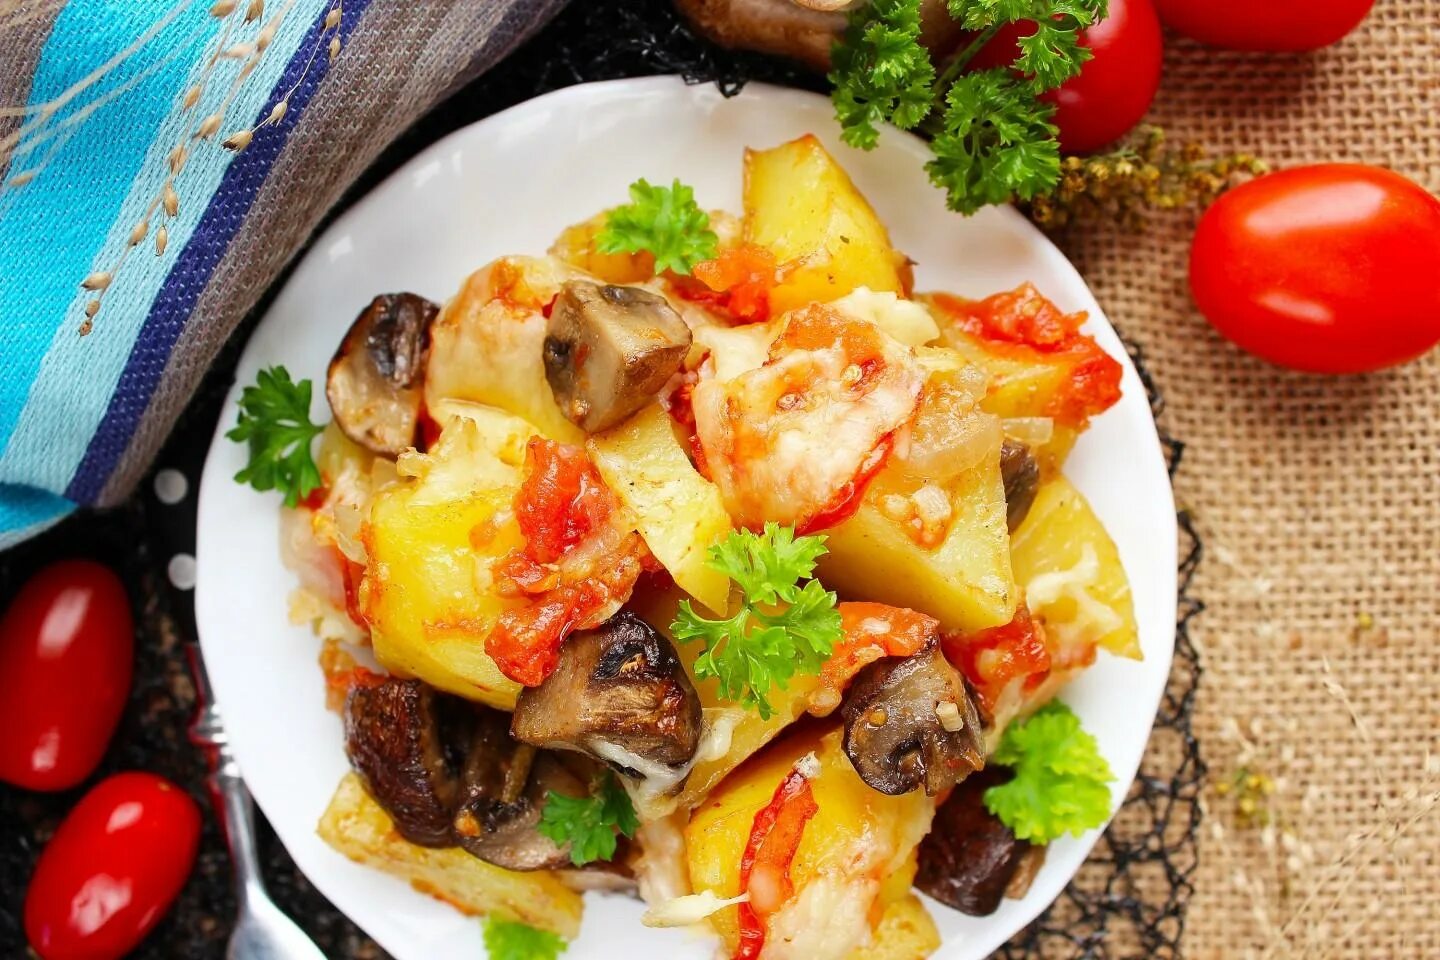 Картошка с грибами и томатами. Картошка с помидорами в духовке. Картошечка с грибами помидорами. Мясо в духовке с картошкой и помидорами. Мясо с картошкой и помидорами слоями